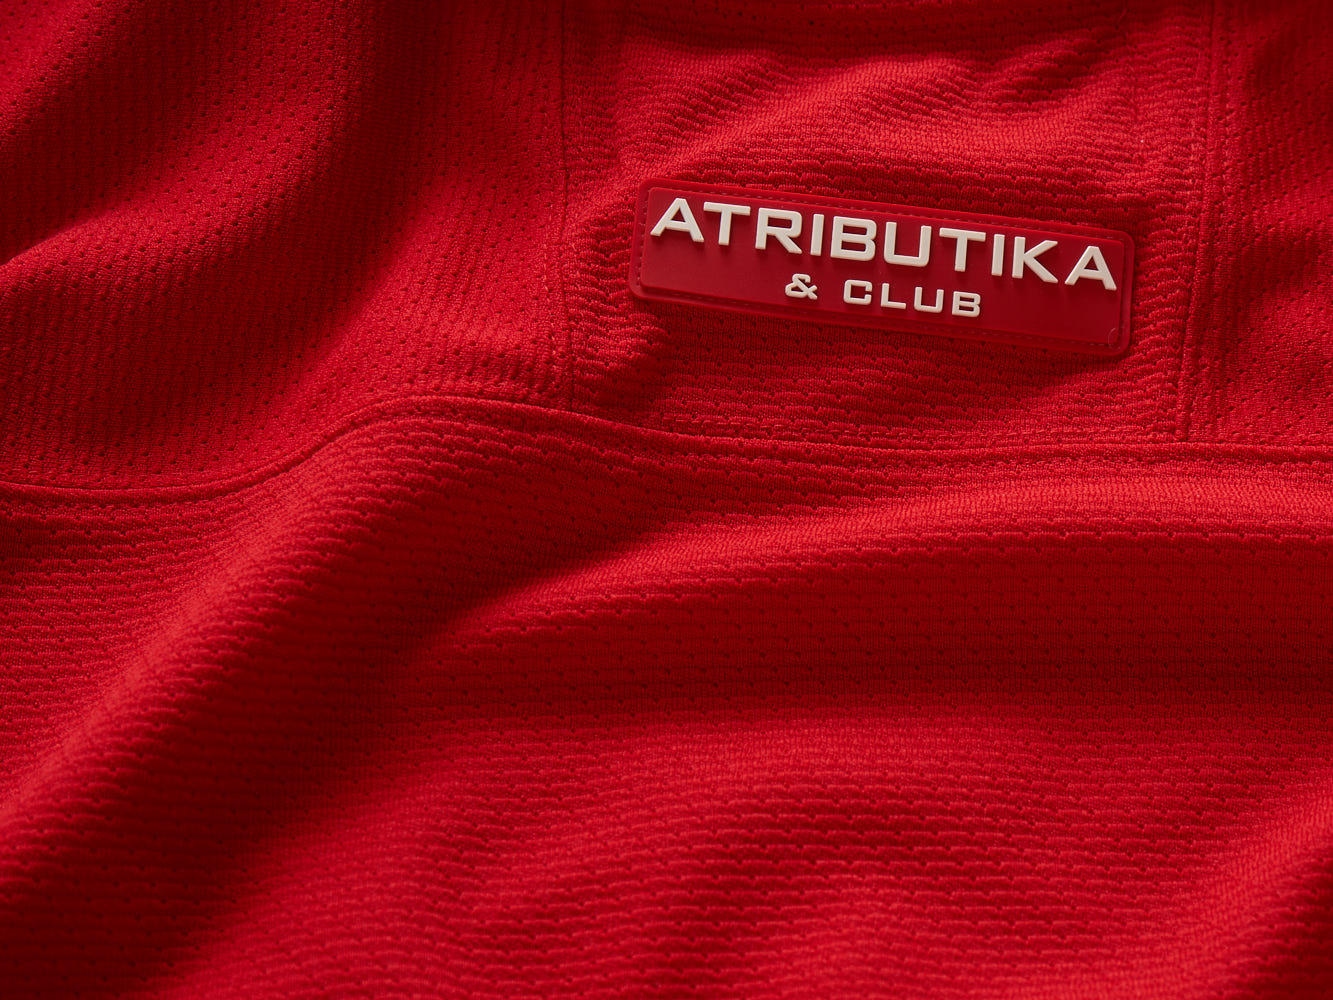   Atributika & club   722300 SR